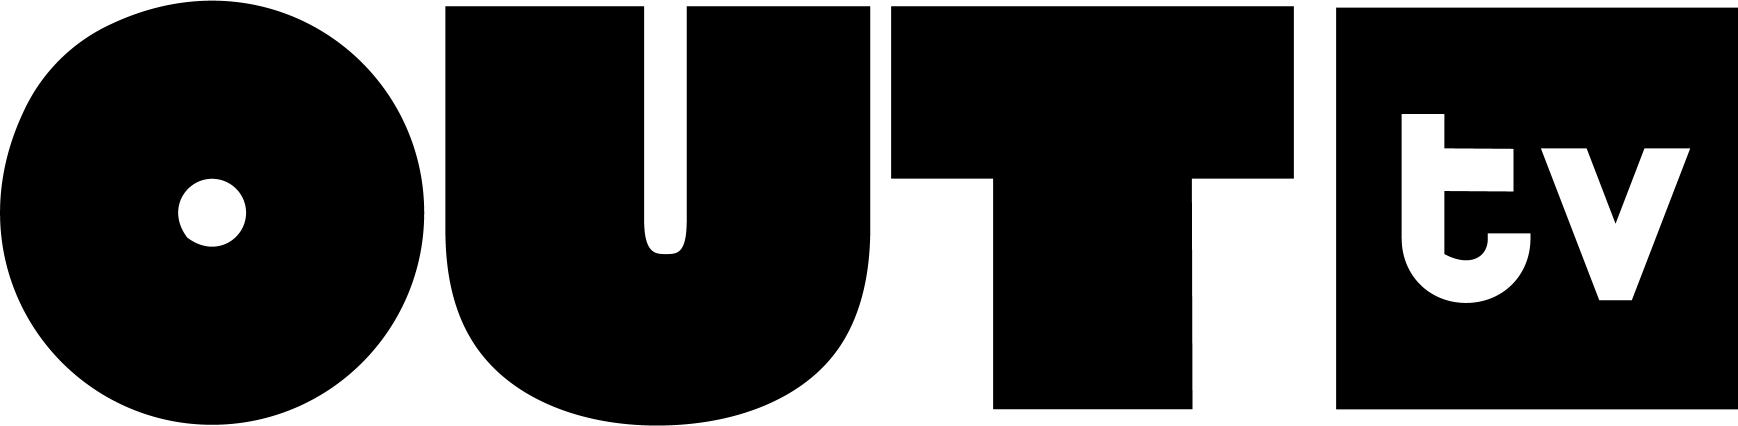 OUTtv logo